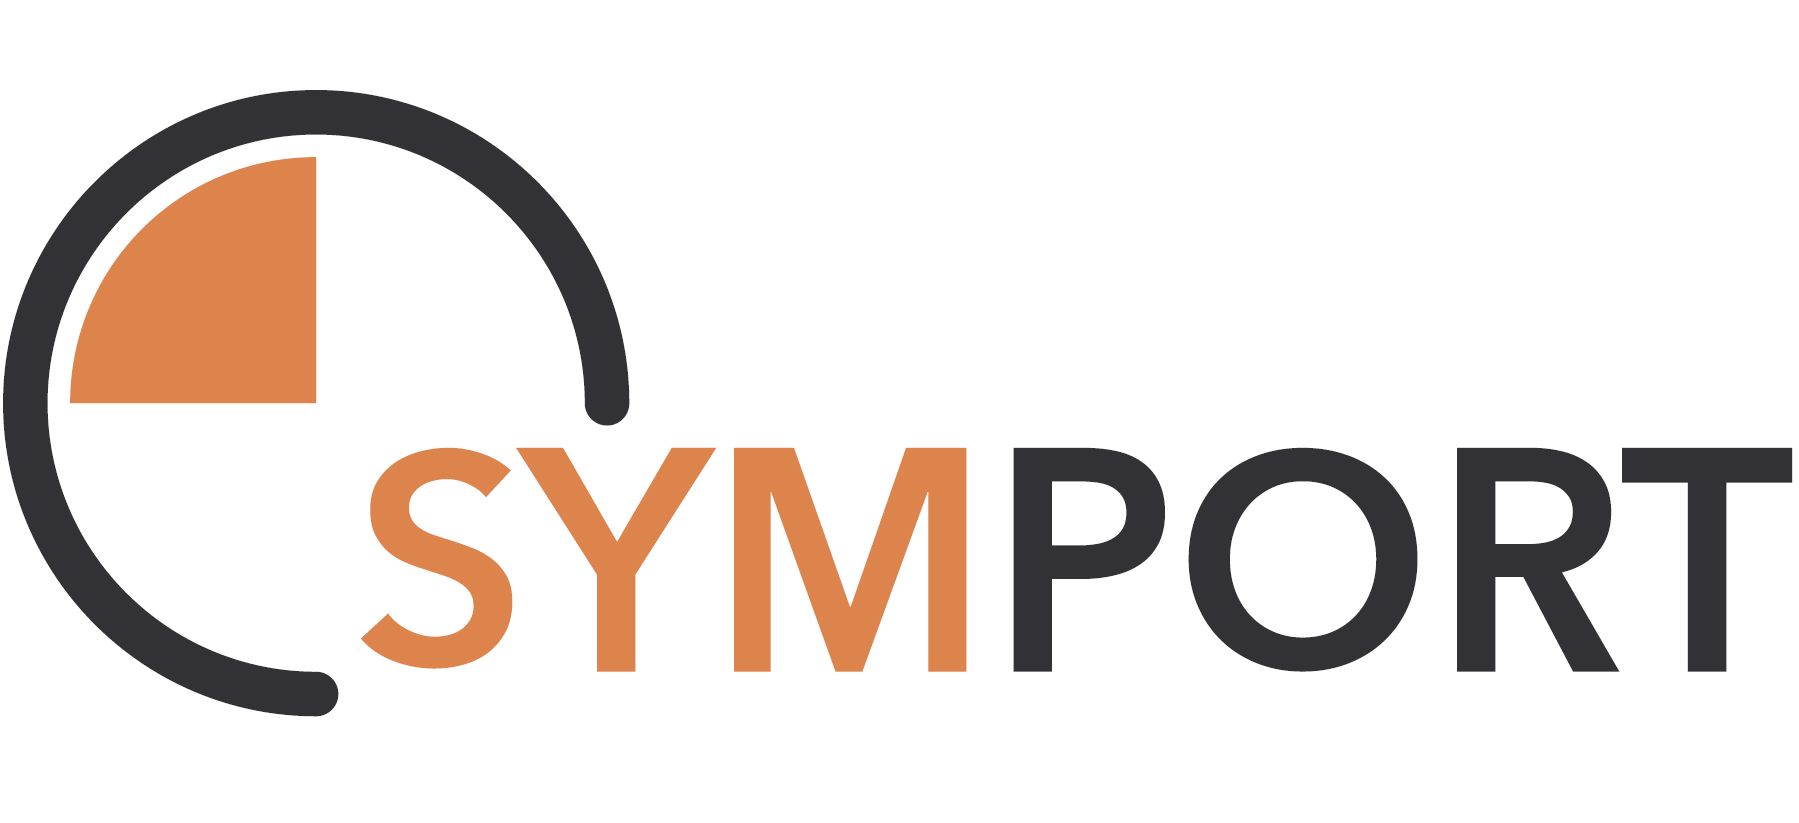 symport-logo